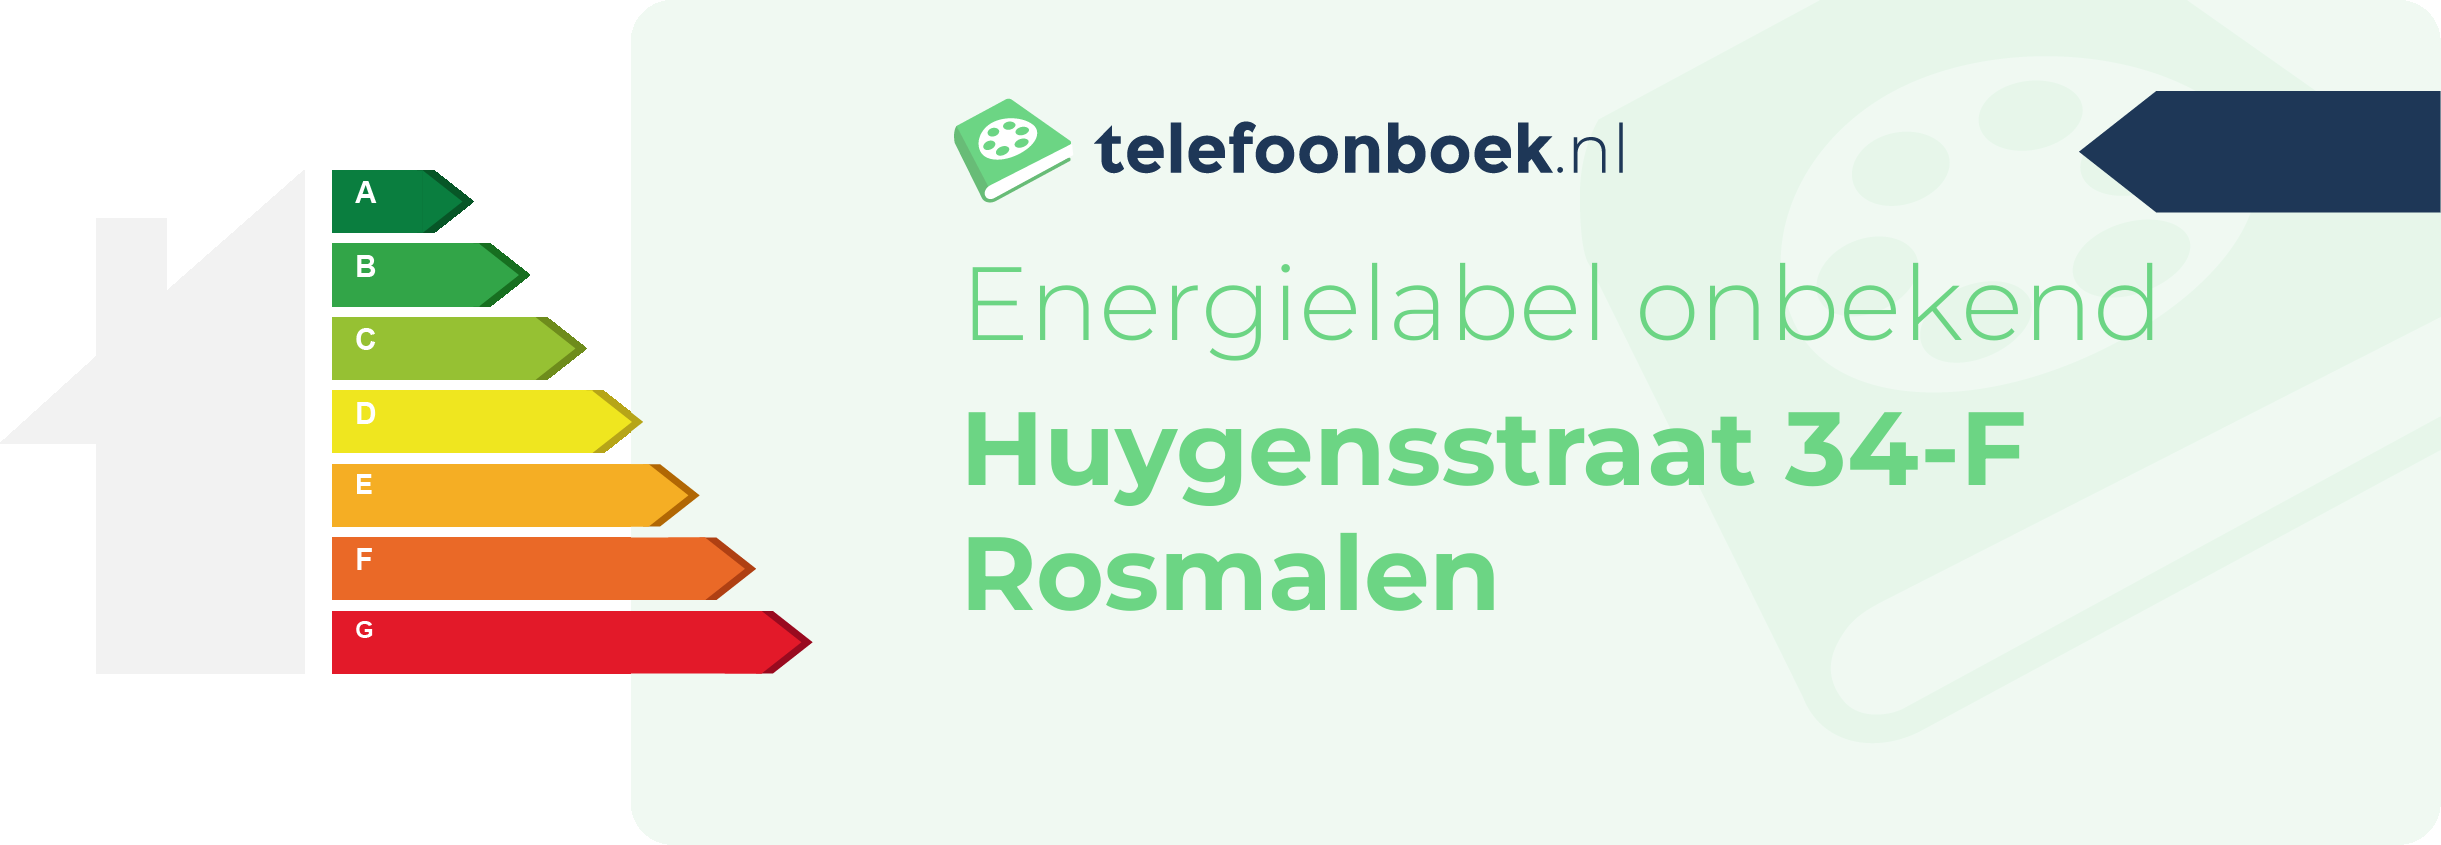 Energielabel Huygensstraat 34-F Rosmalen